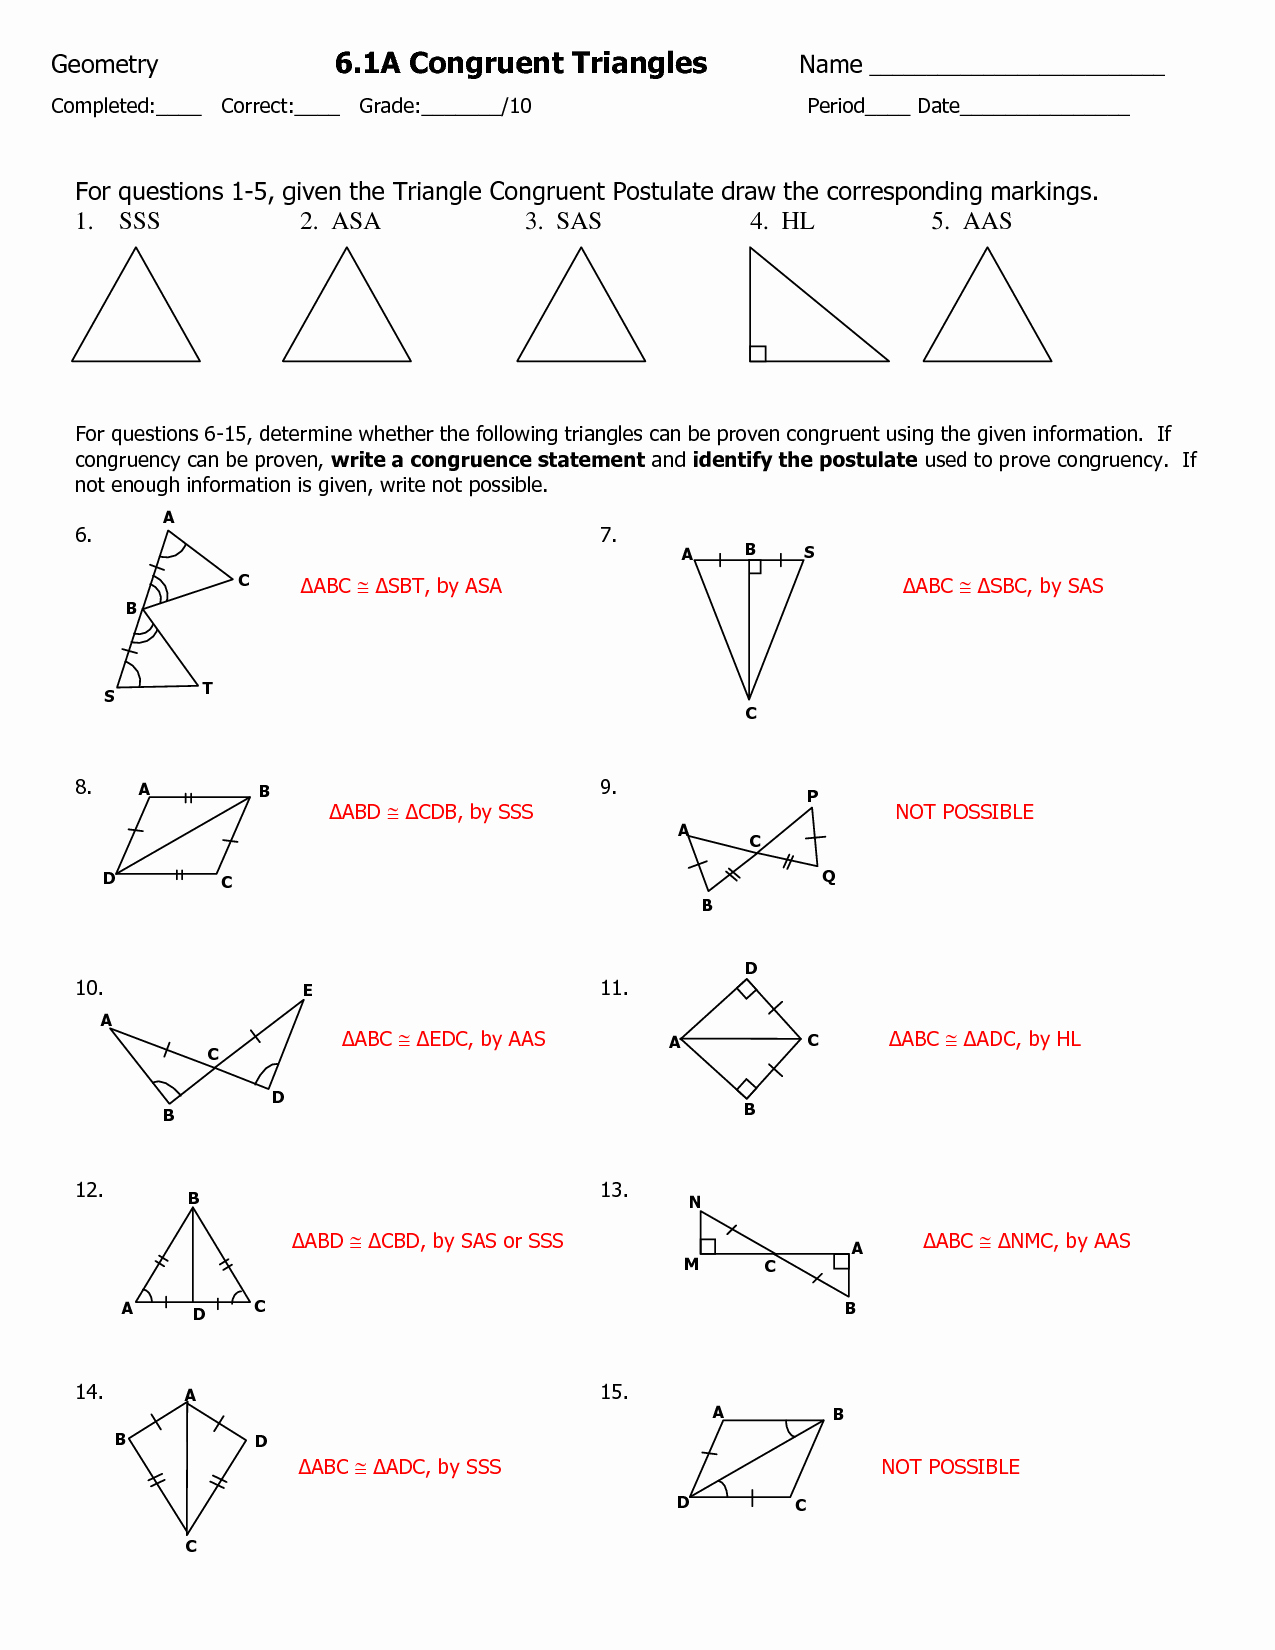 Geometry Worksheet Congruent Triangles Lovely Triangle Congruence Worksheet Google Search